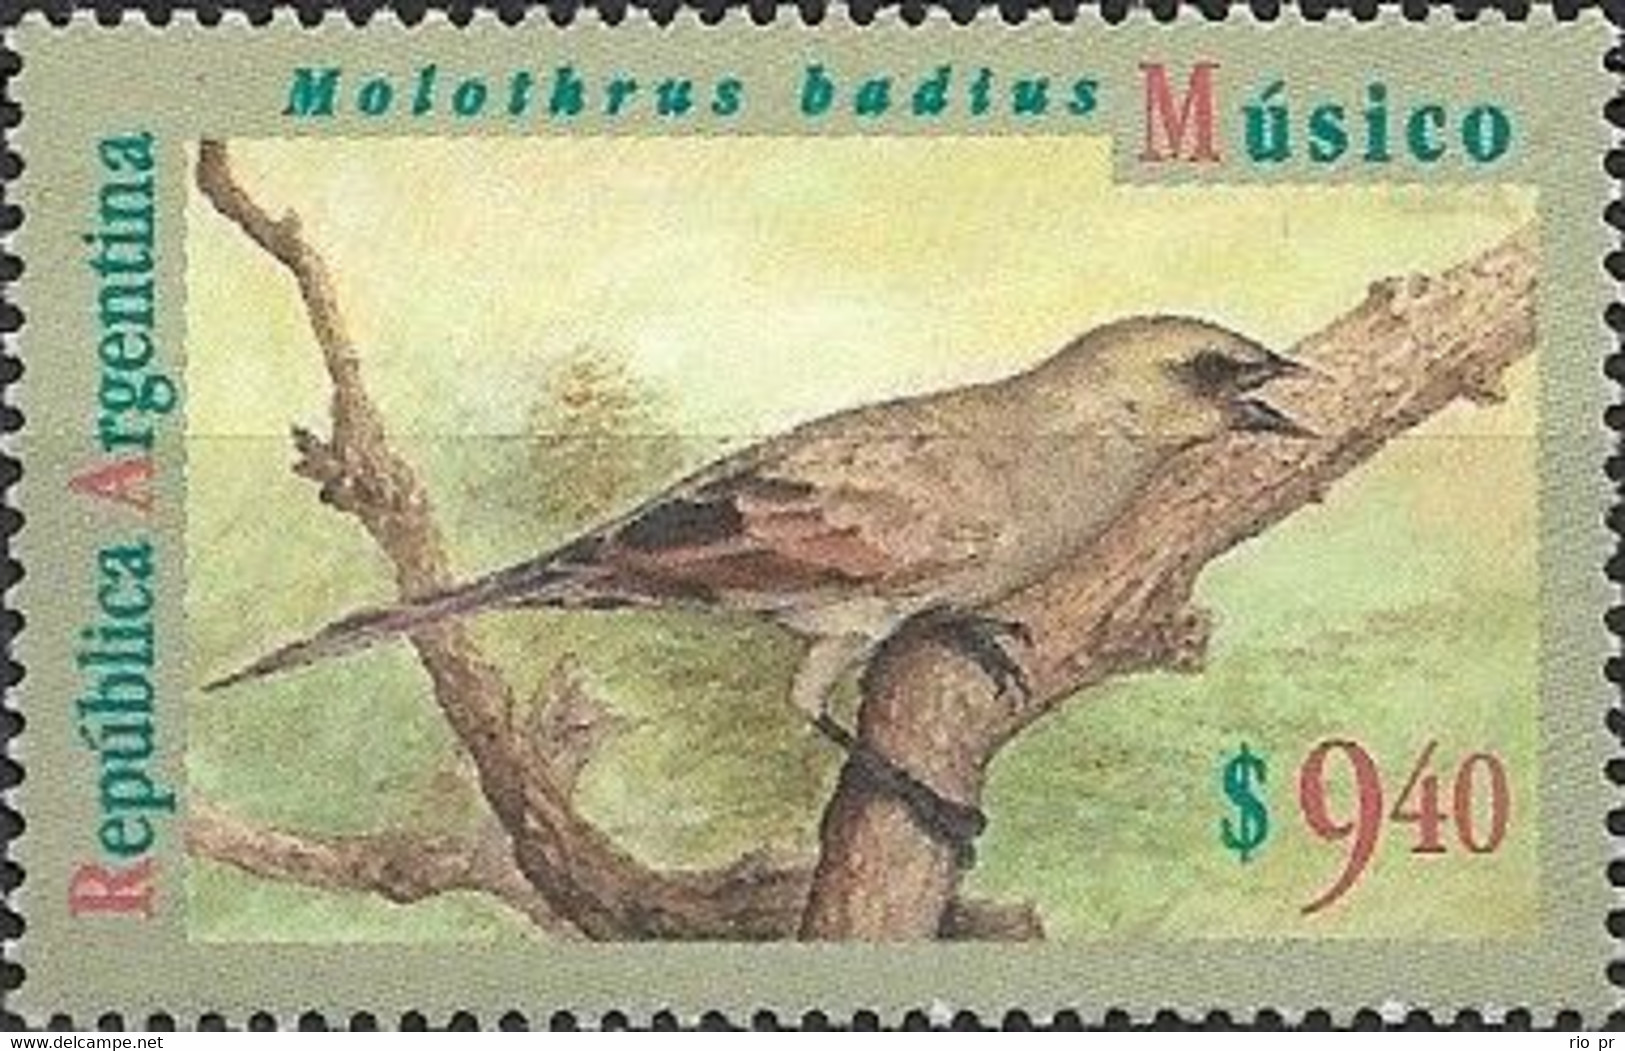 ARGENTINA - DEFINITIVE: GRAYISH BAYWING (MOLOTHRUS BADIUS) 1995 - MNH - Sparrows